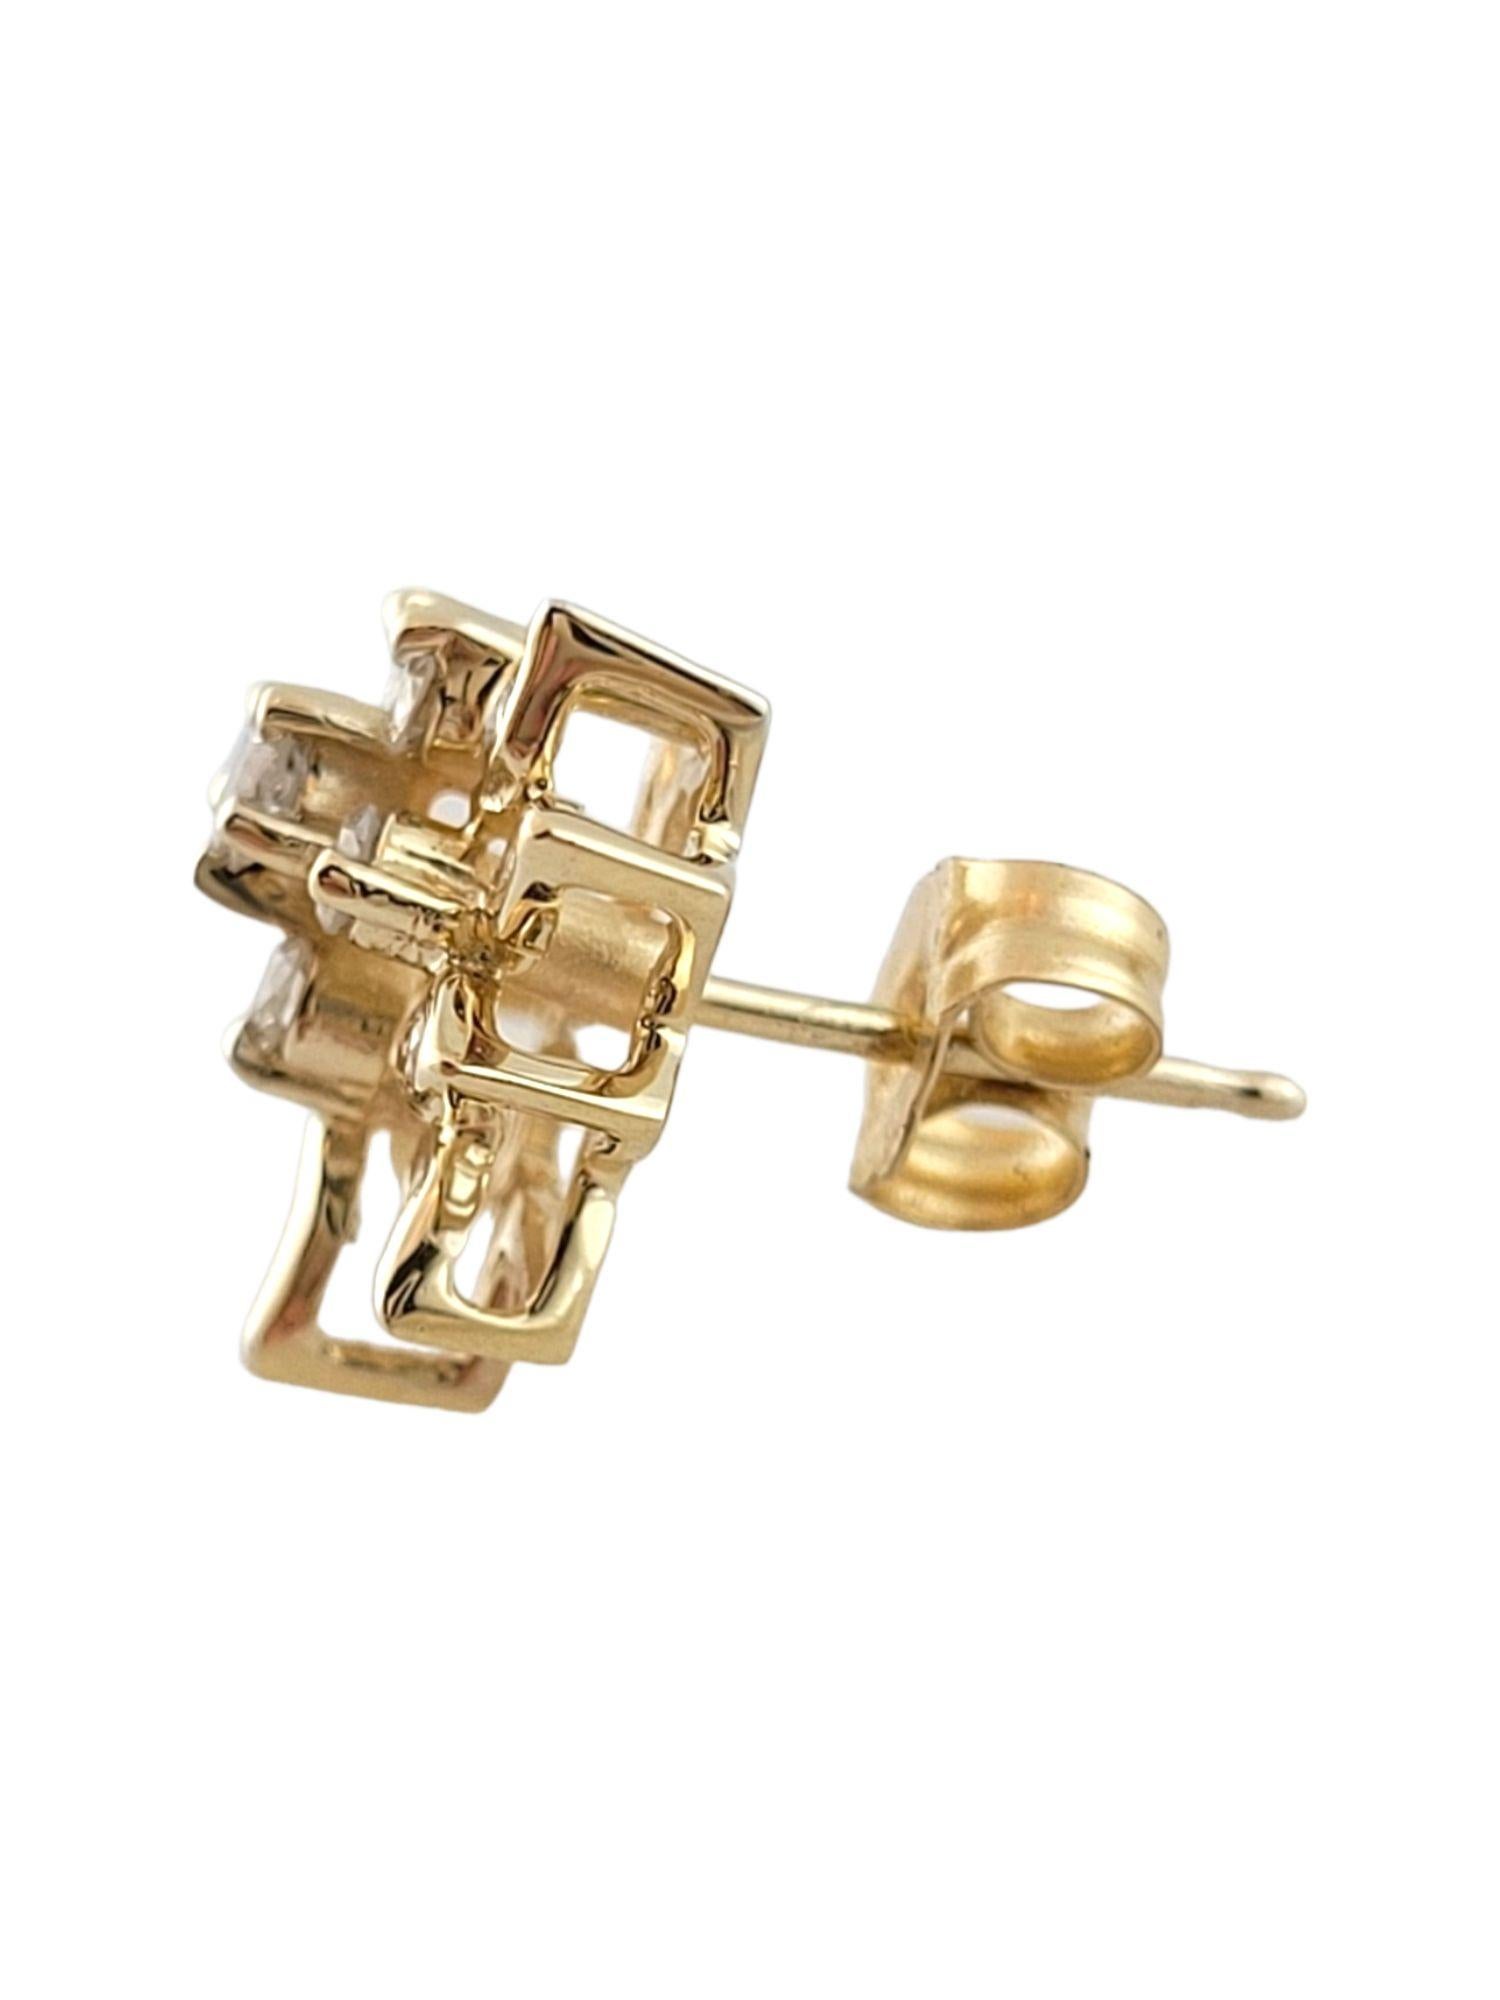 Brilliant Cut 14K Yellow Gold Diamond Earrings #14827 For Sale